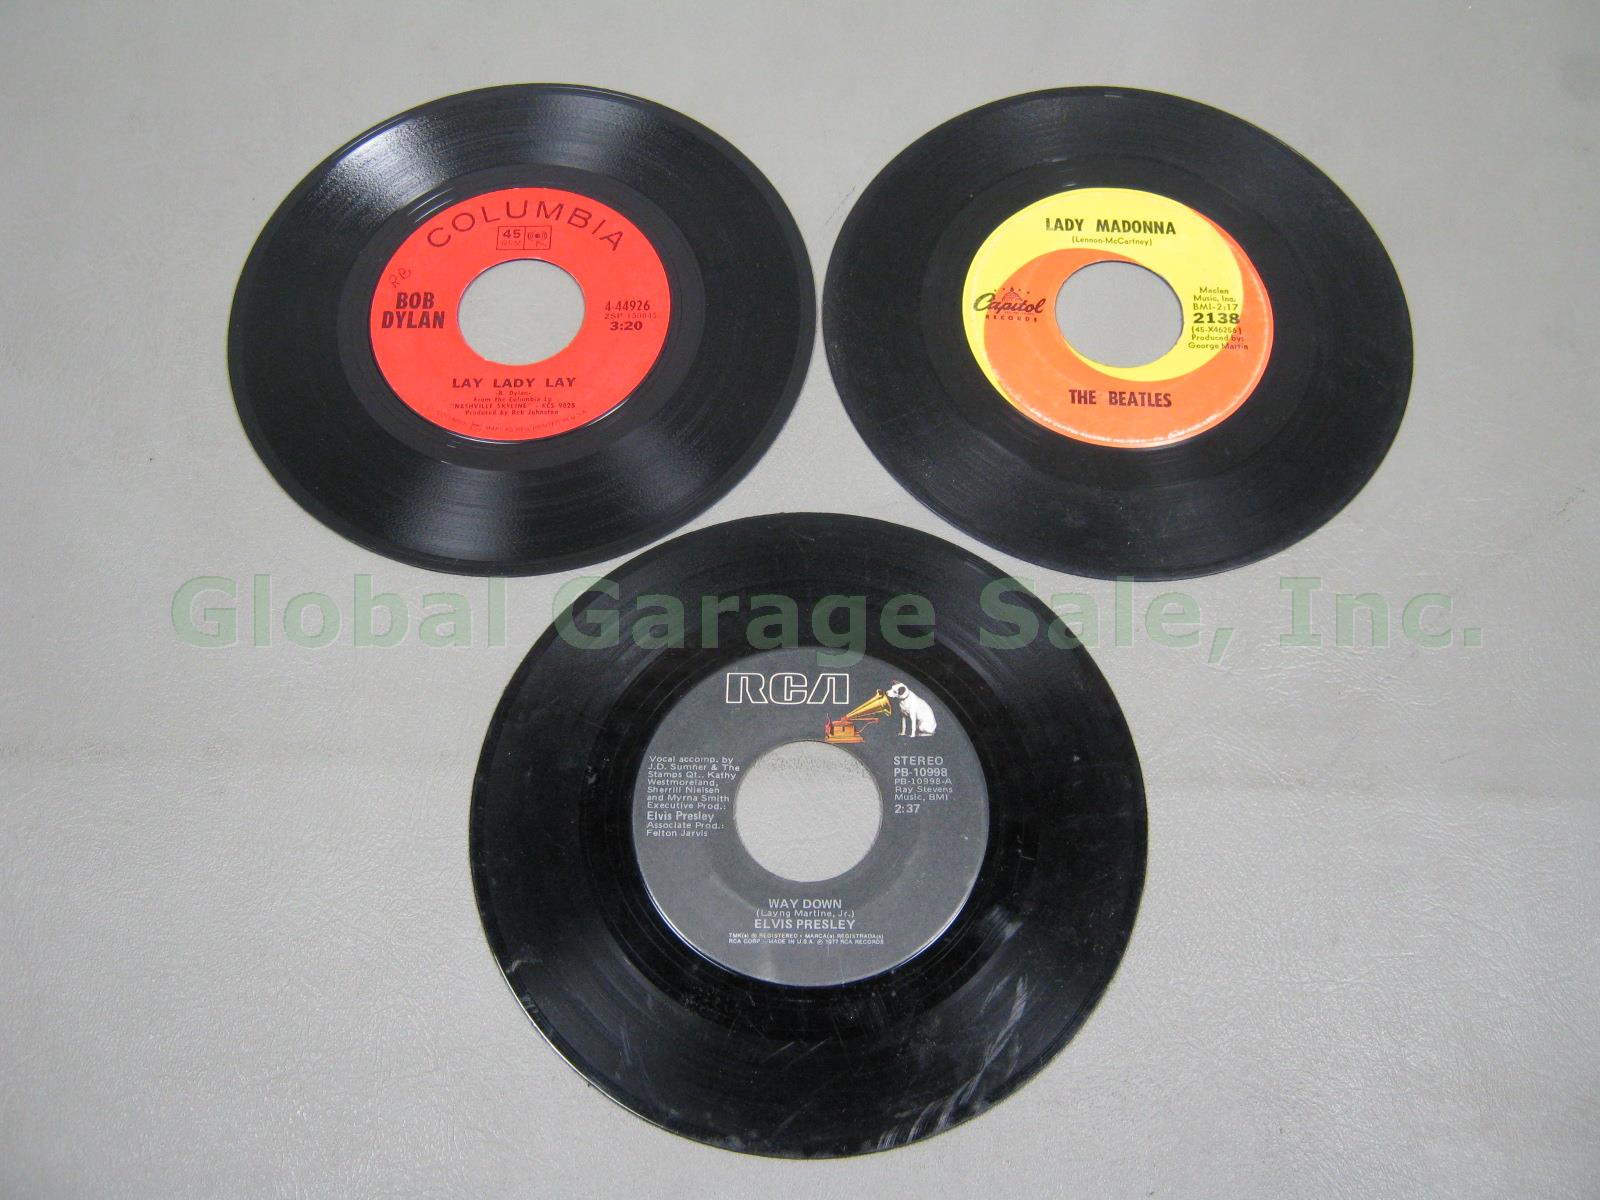 HUGE 45 Record Lot 500+ 50s-80s Elvis Presley Beatles Rock DJ Copy Promo Single 3